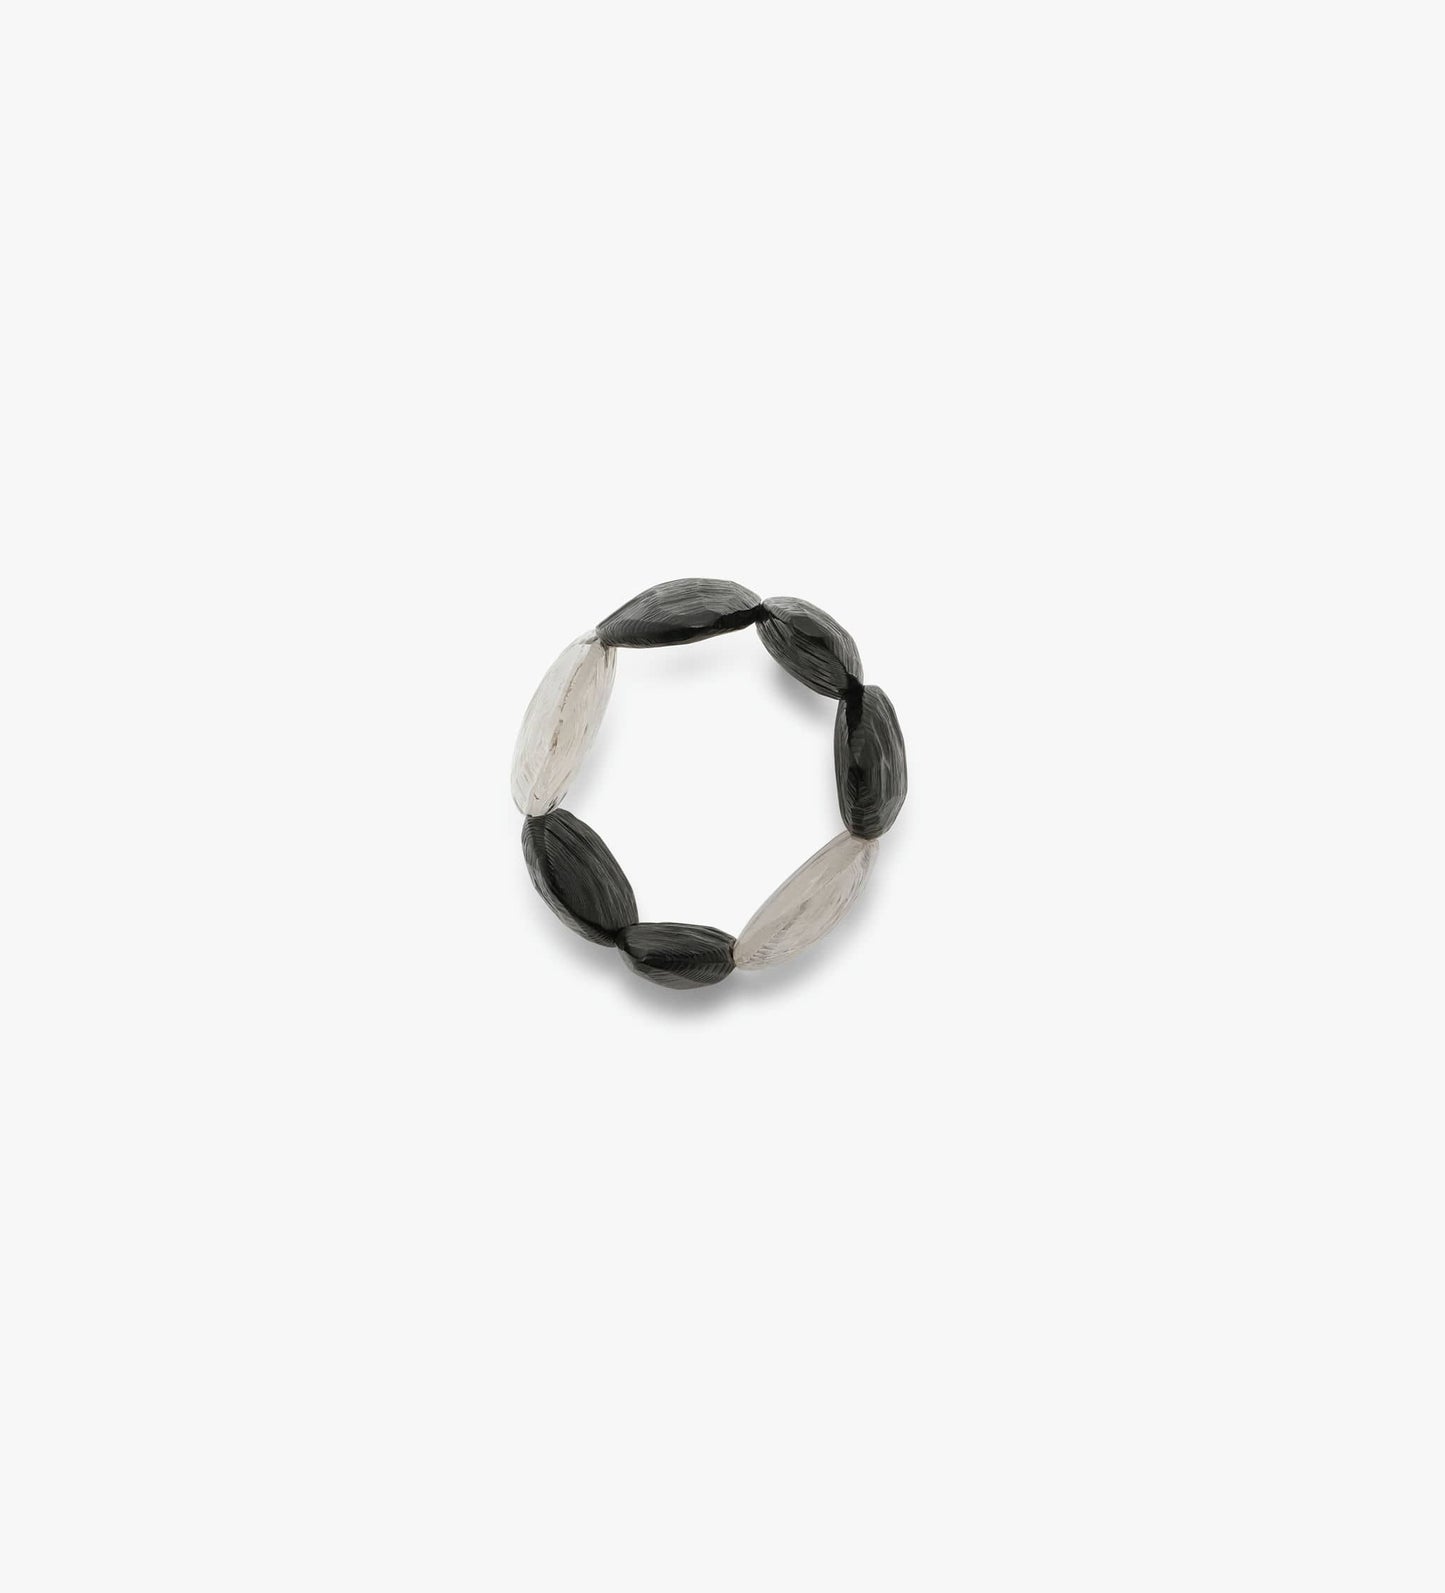 Bracelet: ebony, greencast acrylic